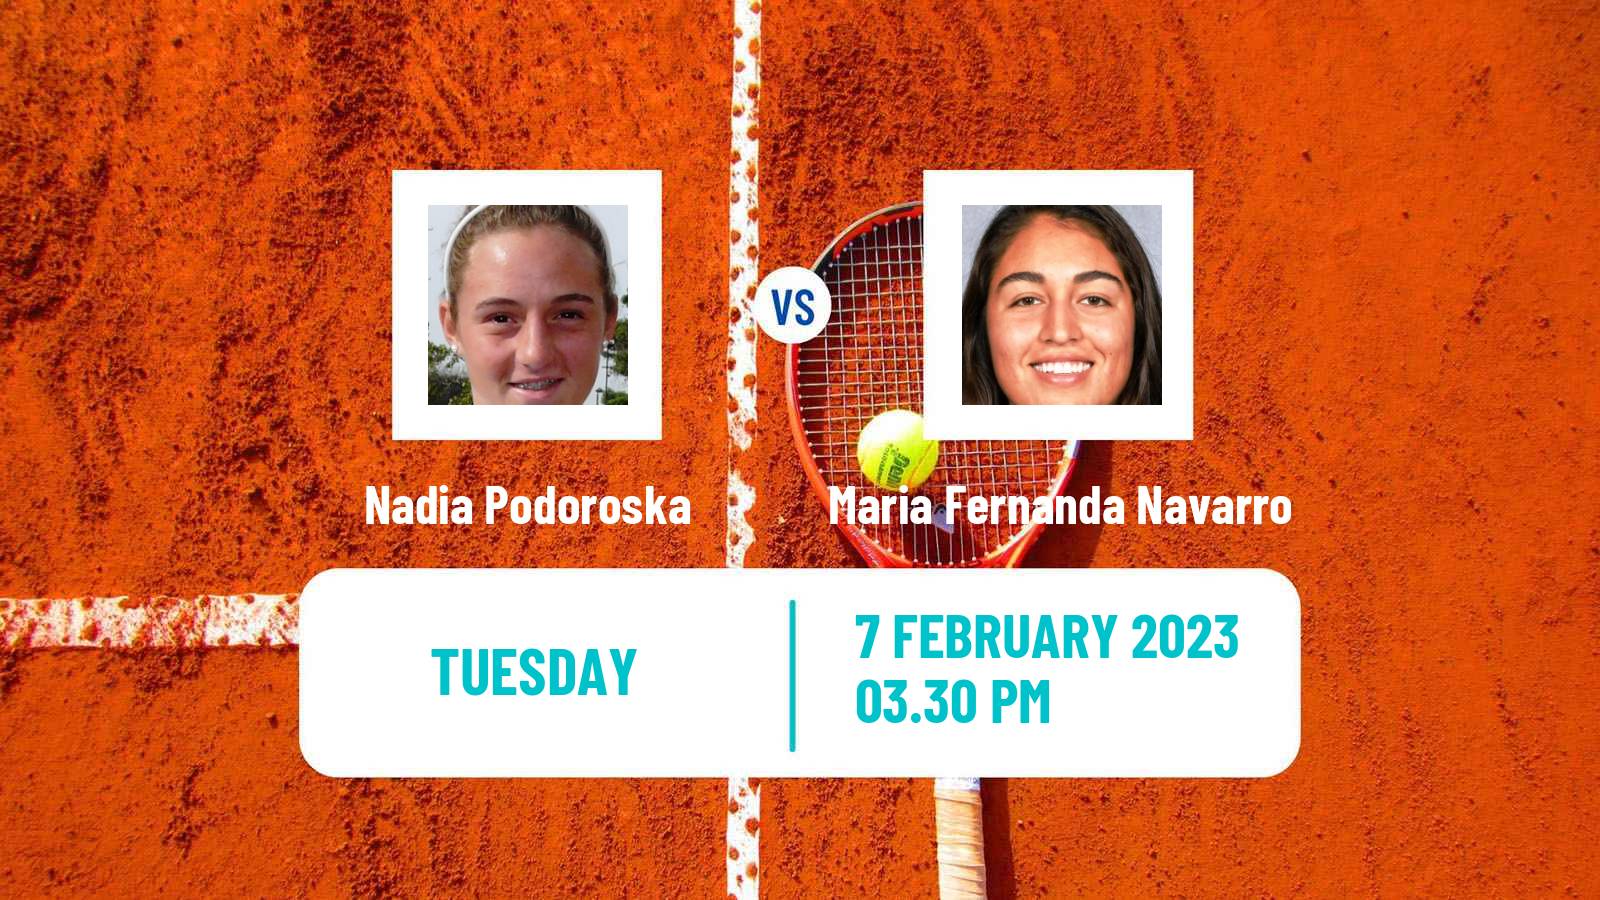 Tennis ITF Tournaments Nadia Podoroska - Maria Fernanda Navarro